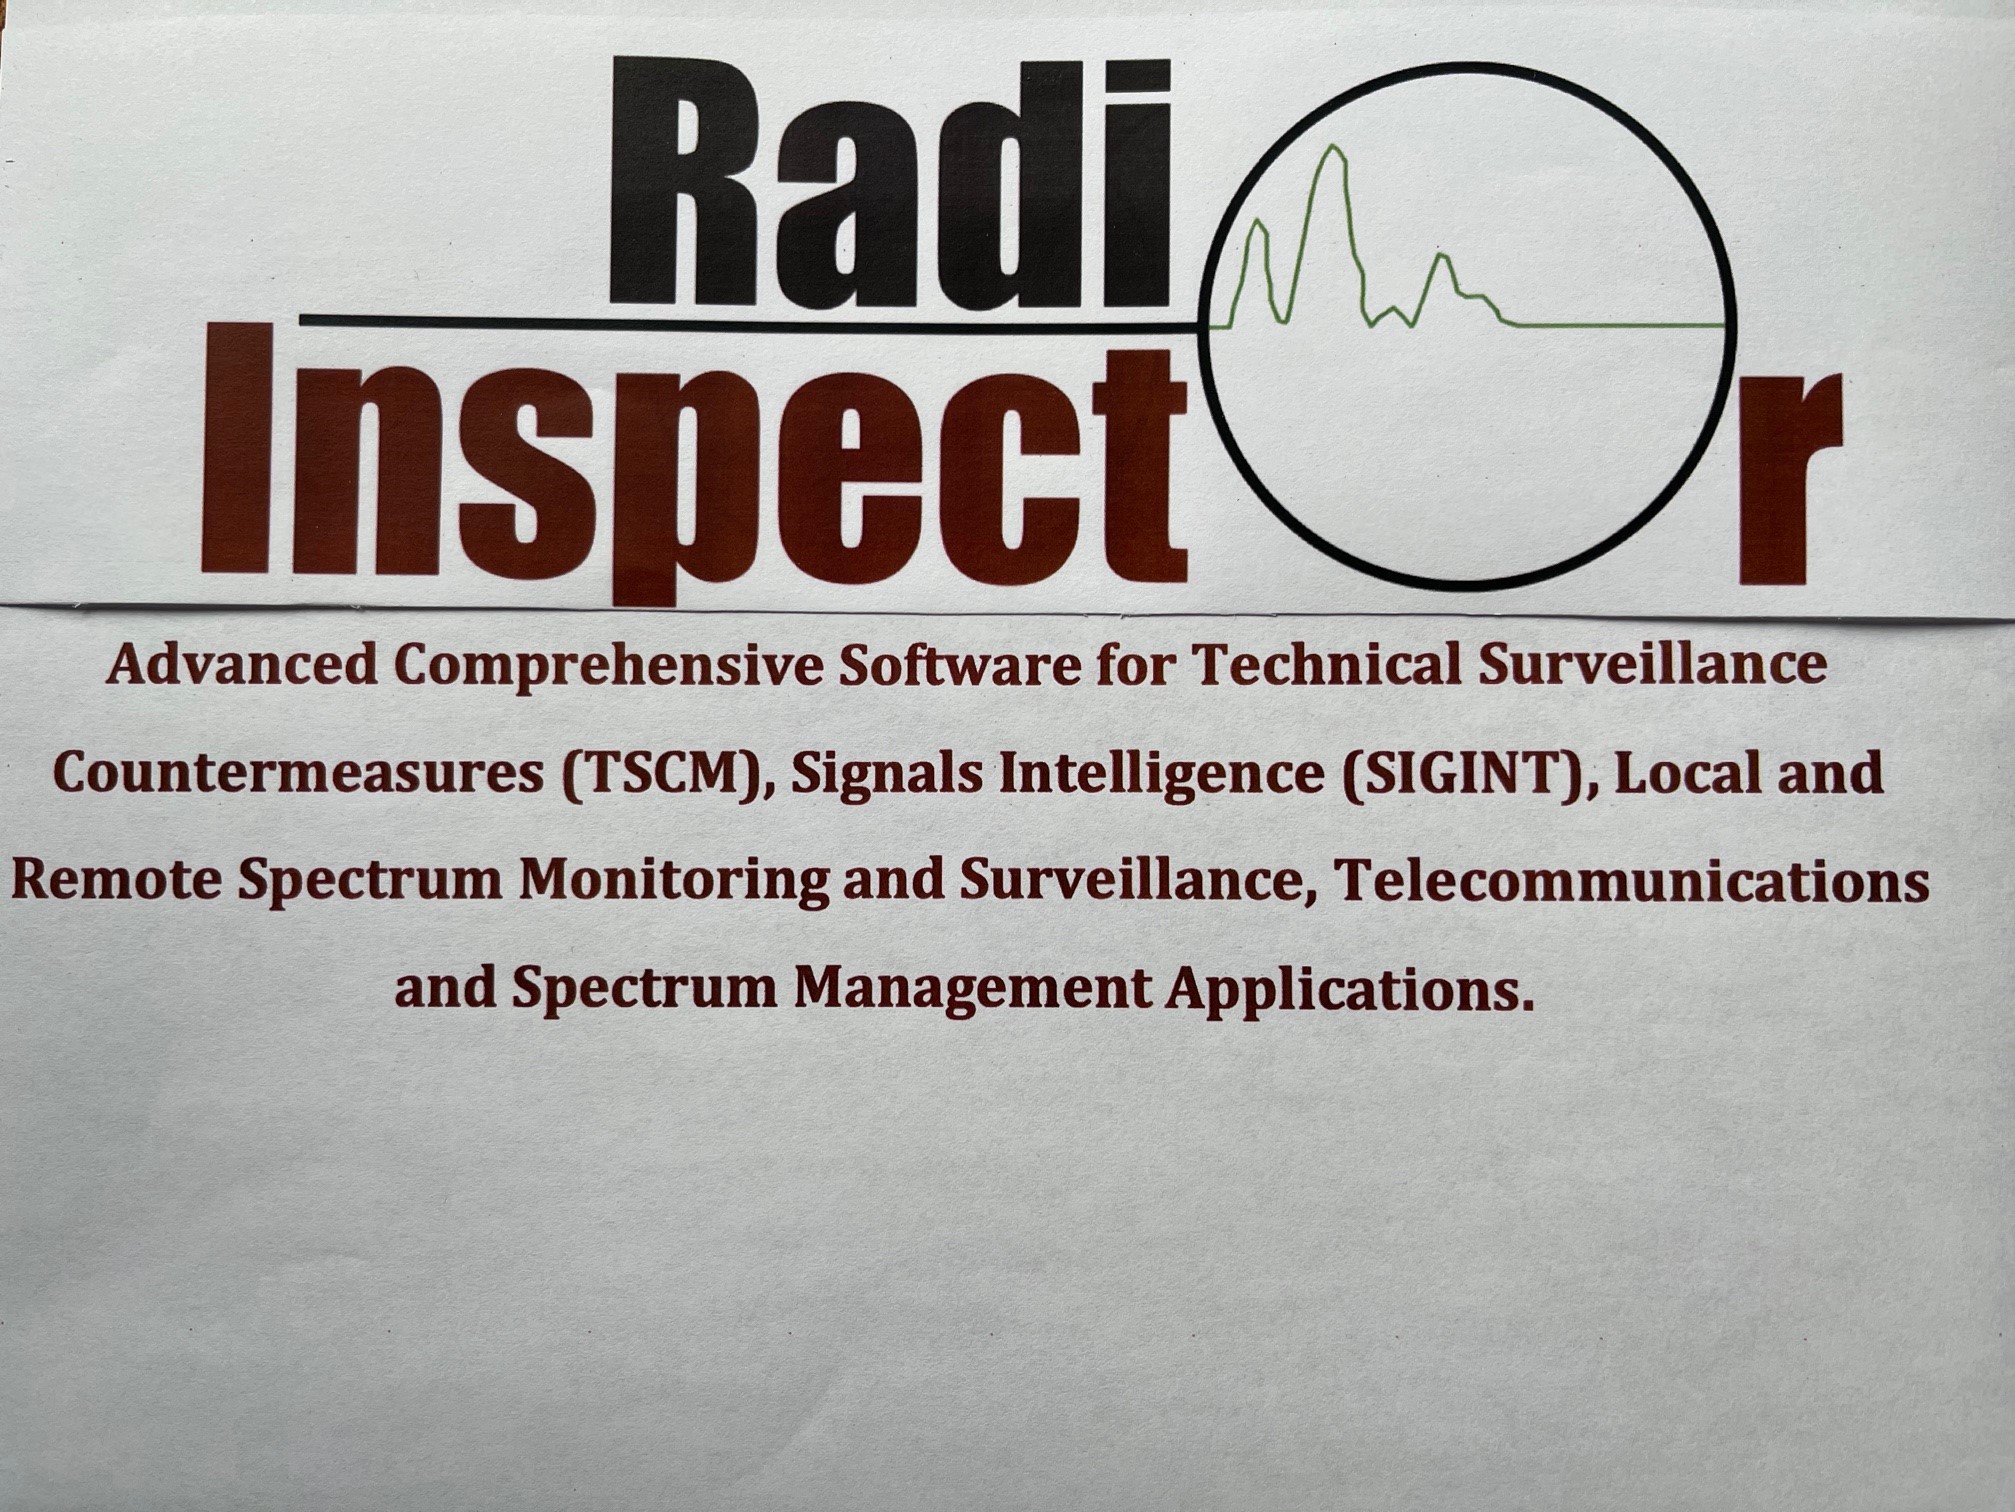 Radio Inspector